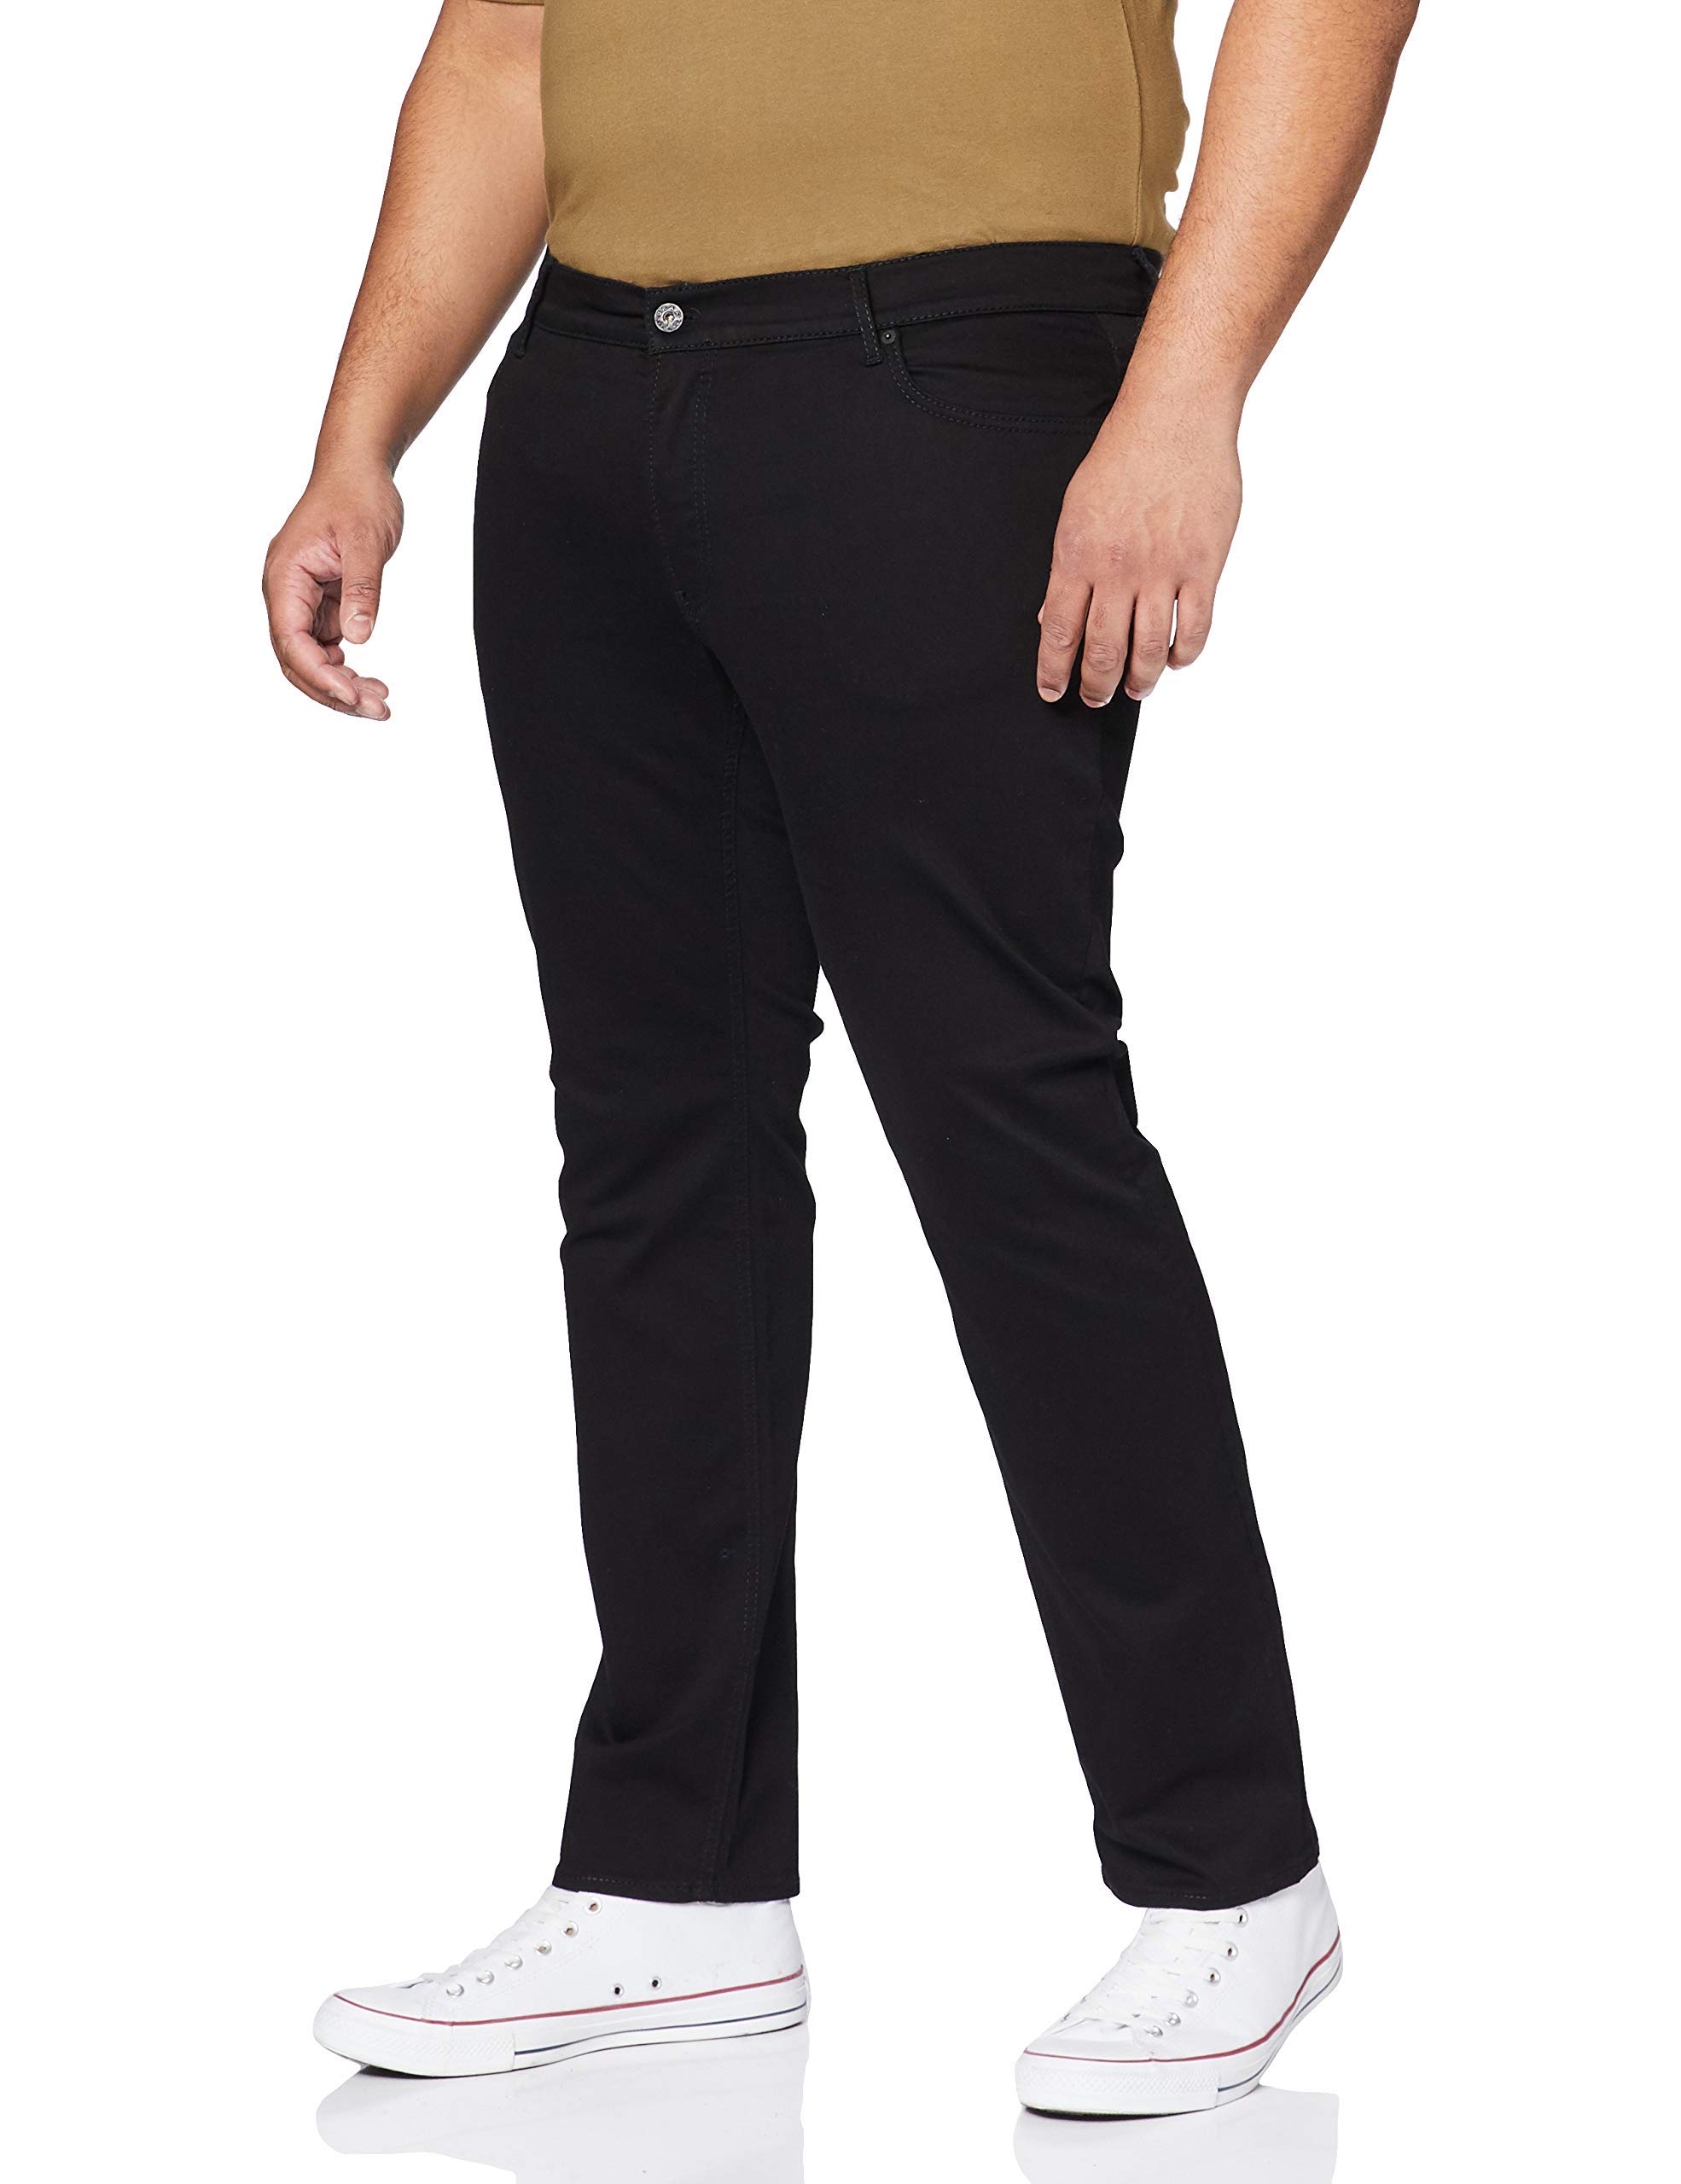 BRAX Herren Slim Fit Jeans Hose Style Chuck Hi-Flex Stretch Baumwolle, schwarz,36/32, PERMA BLACK, 36W / 32L